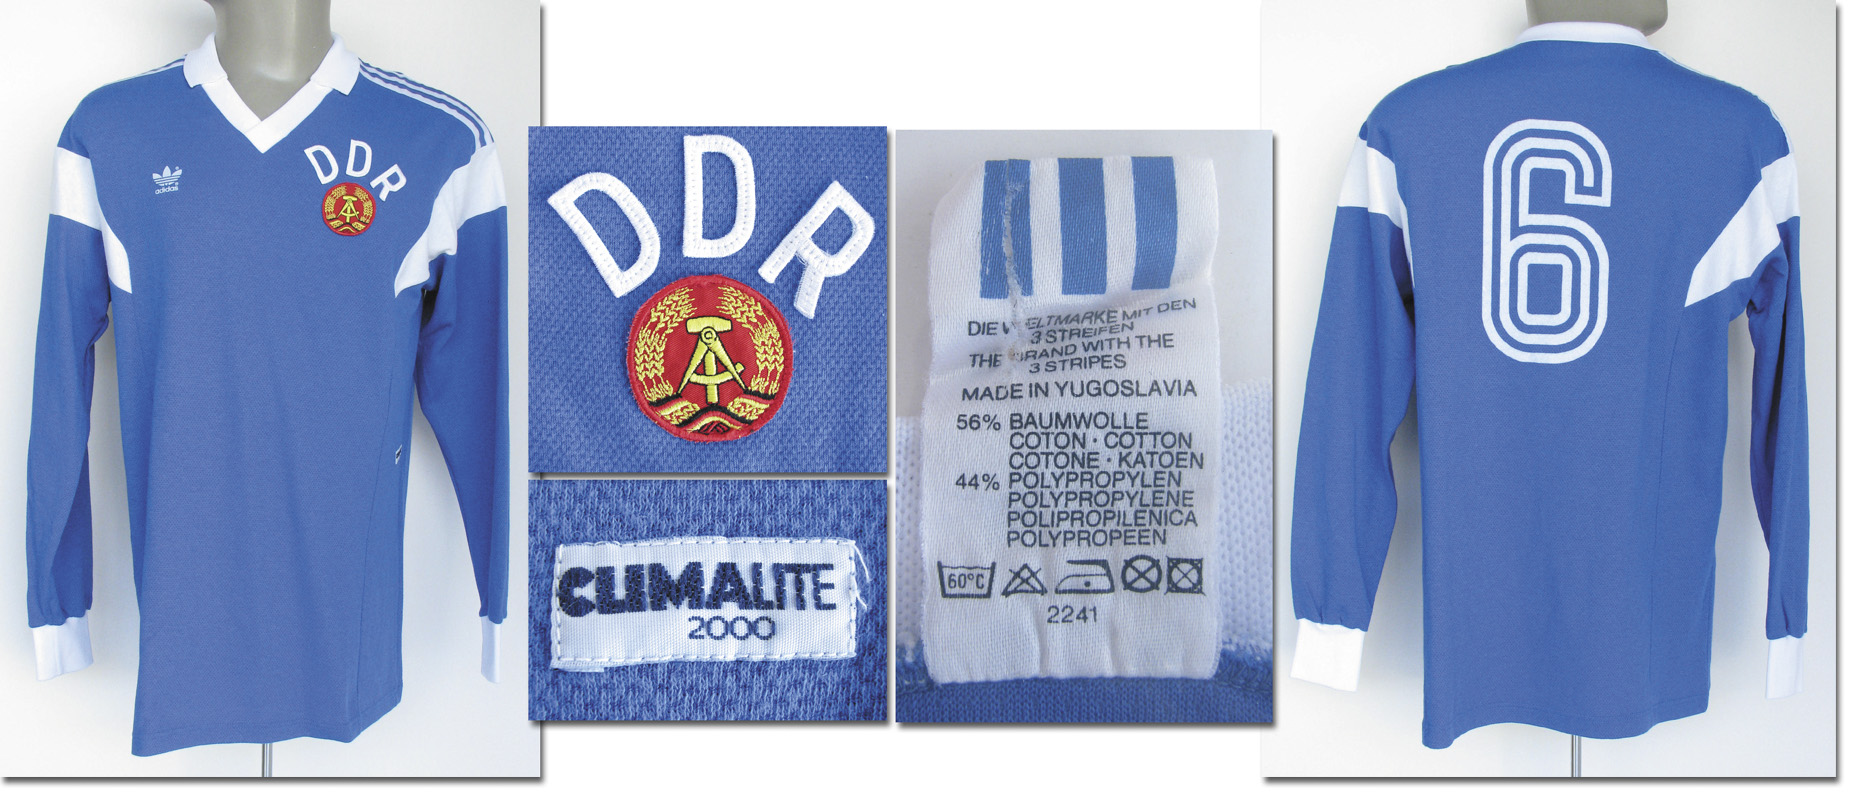 worn football shirt DDR 1980s - Original match worn shirt GDR international team with numb